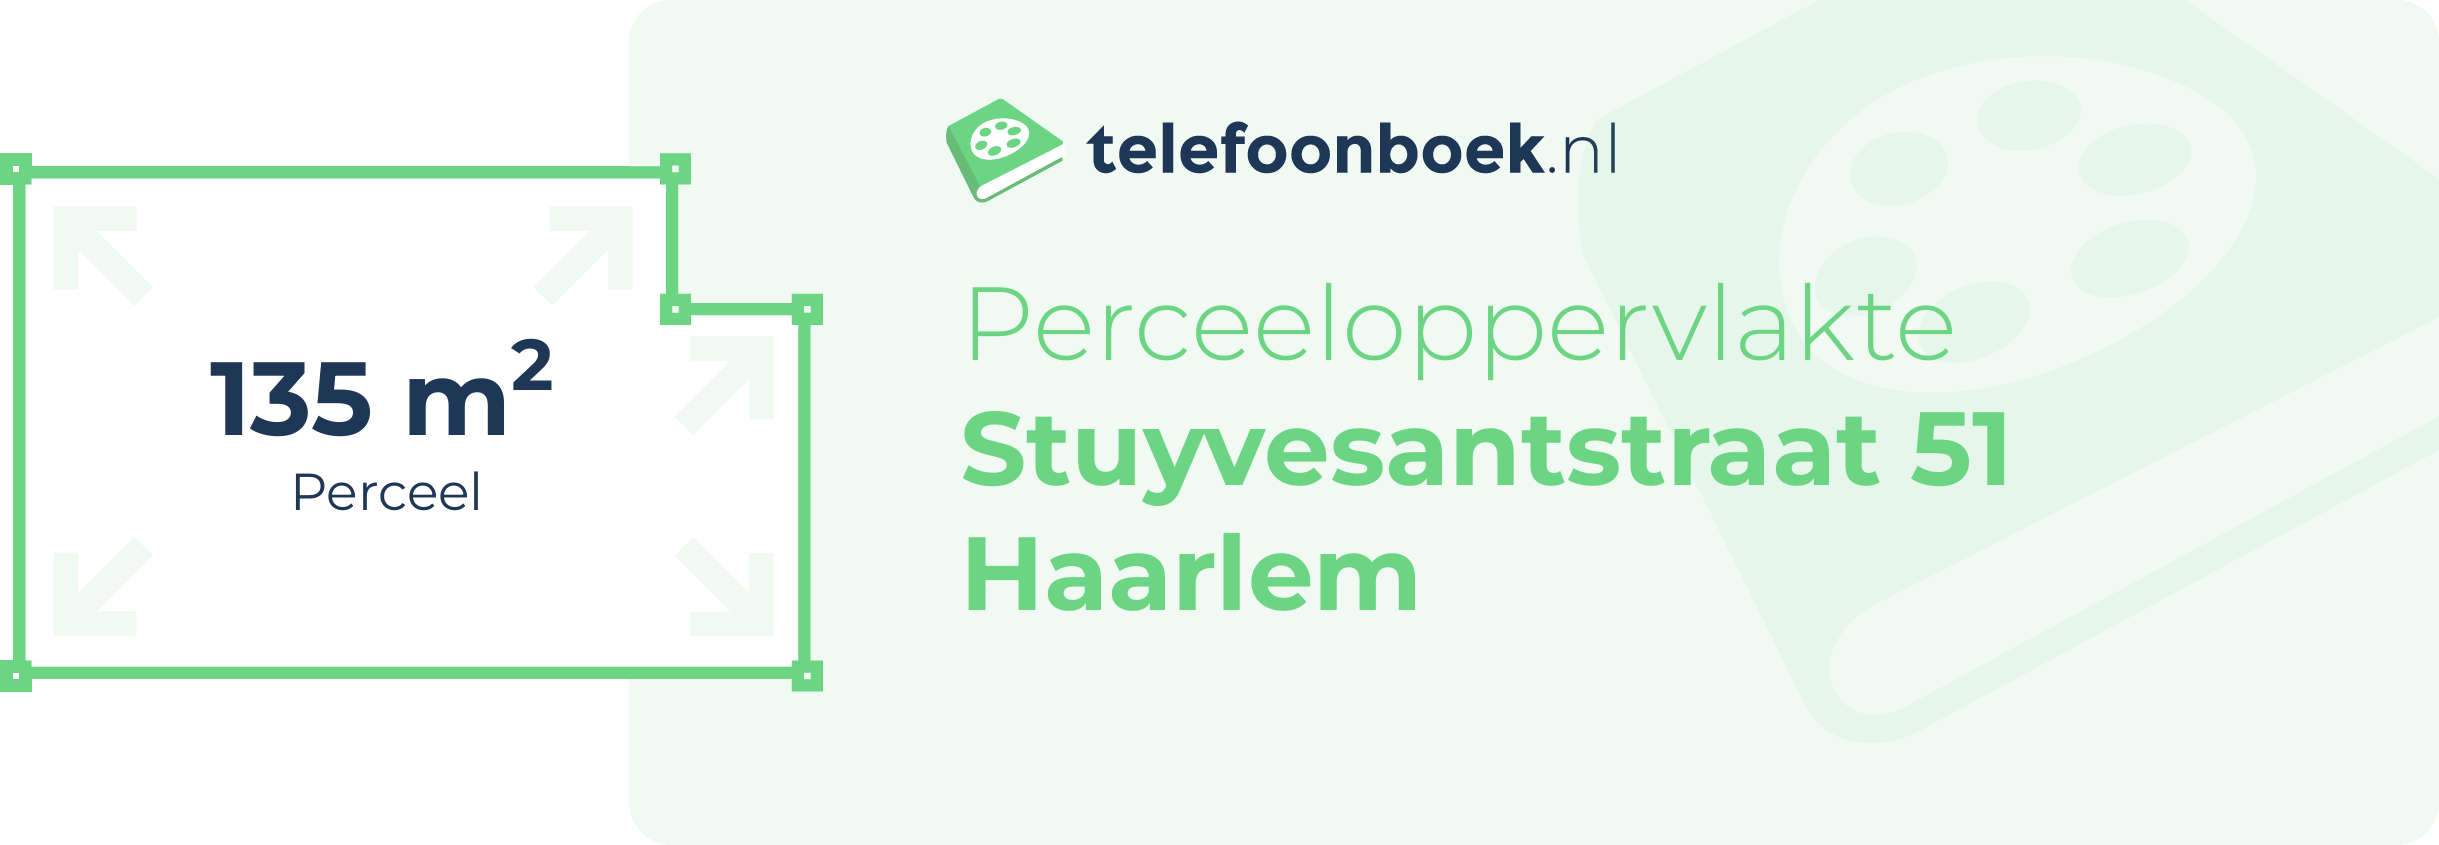 Perceeloppervlakte Stuyvesantstraat 51 Haarlem